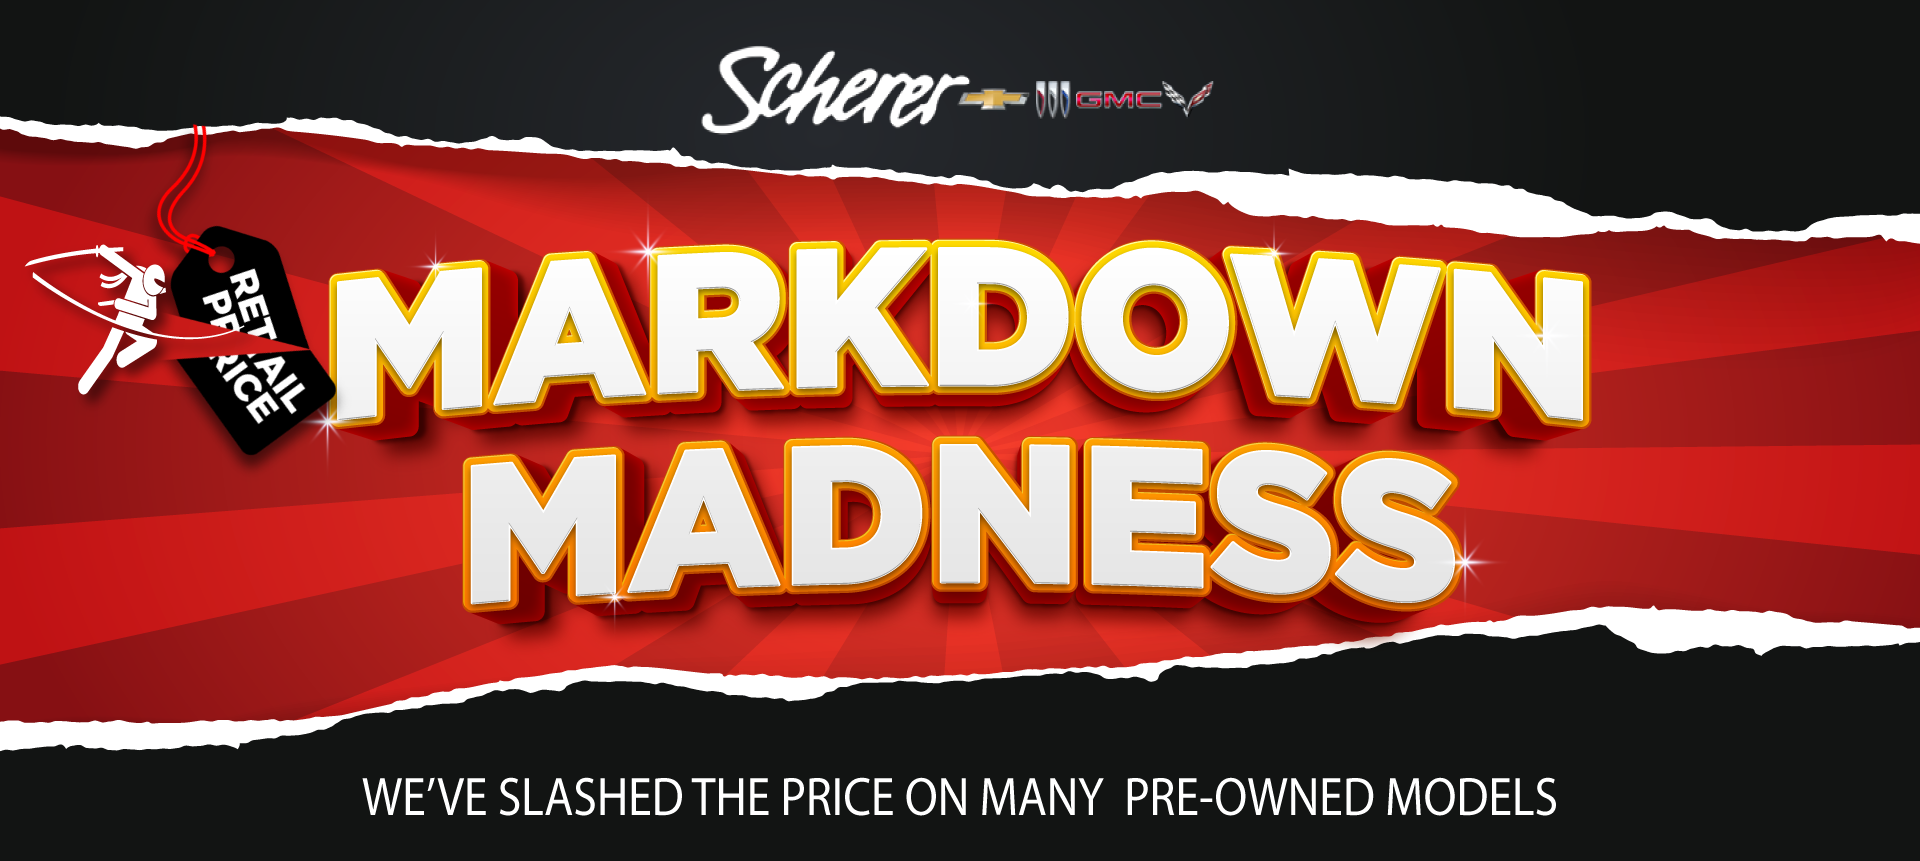 Markdown Madness Sale